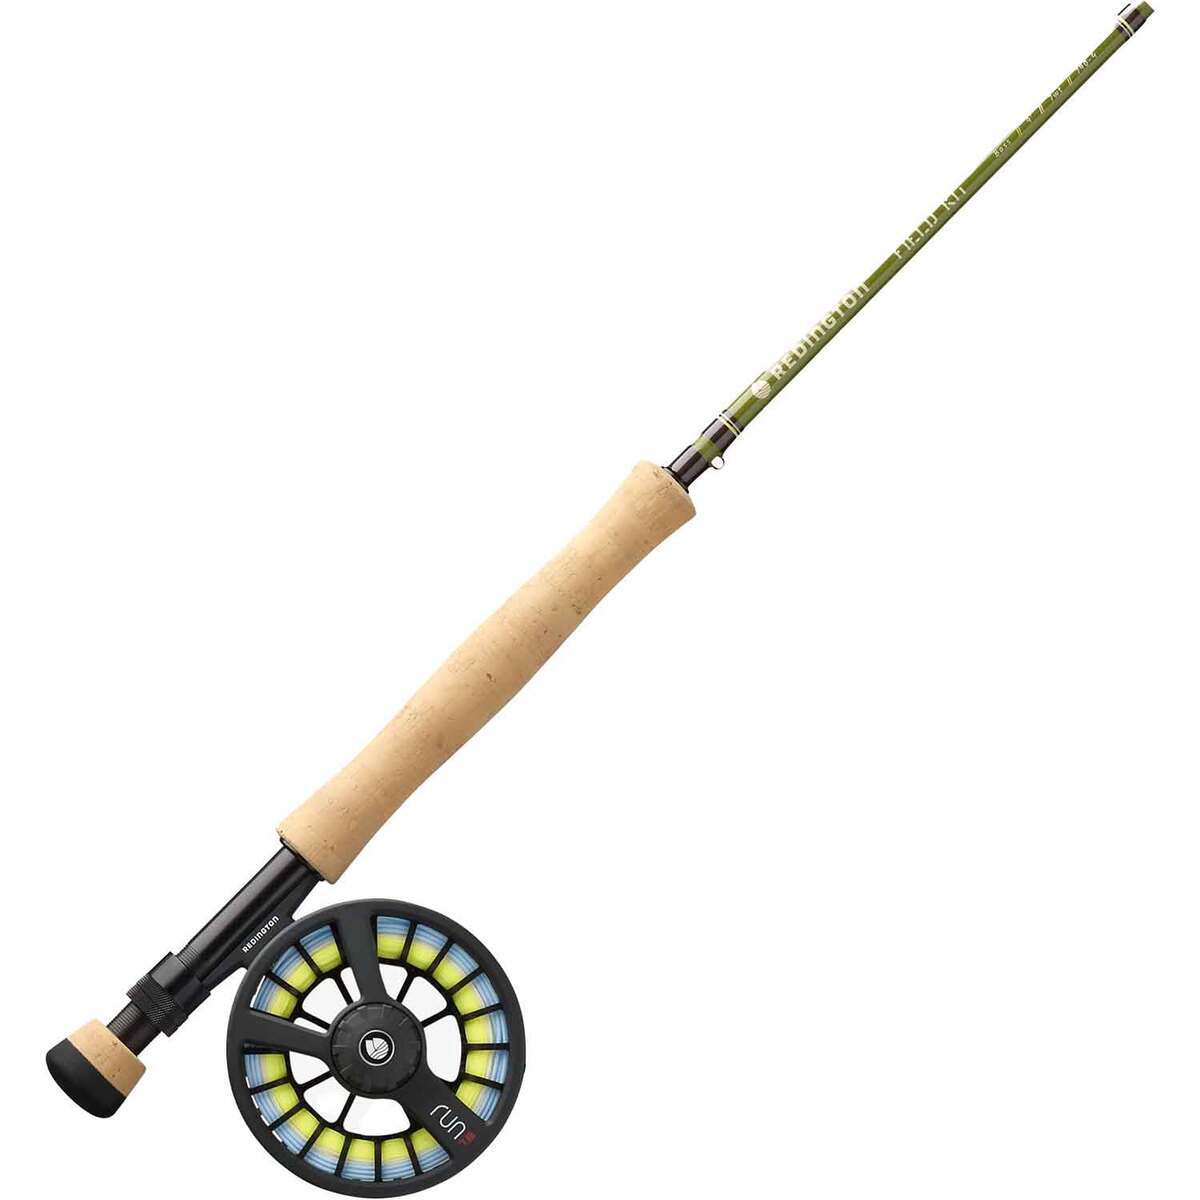 https://www.sportsmans.com/medias/redington-bass-field-kit-fly-fishing-rod-and-reel-combo-9ft-7wt-4pc-1828203-1.jpg?context=bWFzdGVyfGltYWdlc3w0MTA0MHxpbWFnZS9qcGVnfGFHSTBMMmhqWkM4eE1UazFOelF4TWpRNU5UTTVNQzh4TWpBd0xXTnZiblpsY25OcGIyNUdiM0p0WVhSZlltRnpaUzFqYjI1MlpYSnphVzl1Um05eWJXRjBYM050ZHkweE9ESTRNakF6TFRFdWFuQm58ZDYyMTBkZDBhZjBhNDE2NGVjMjc1Y2RkNDNlMDM4NDg4MWRmMzkxOWMyNmUwYTI0N2E4MmM5OTcwODliM2I5OQ